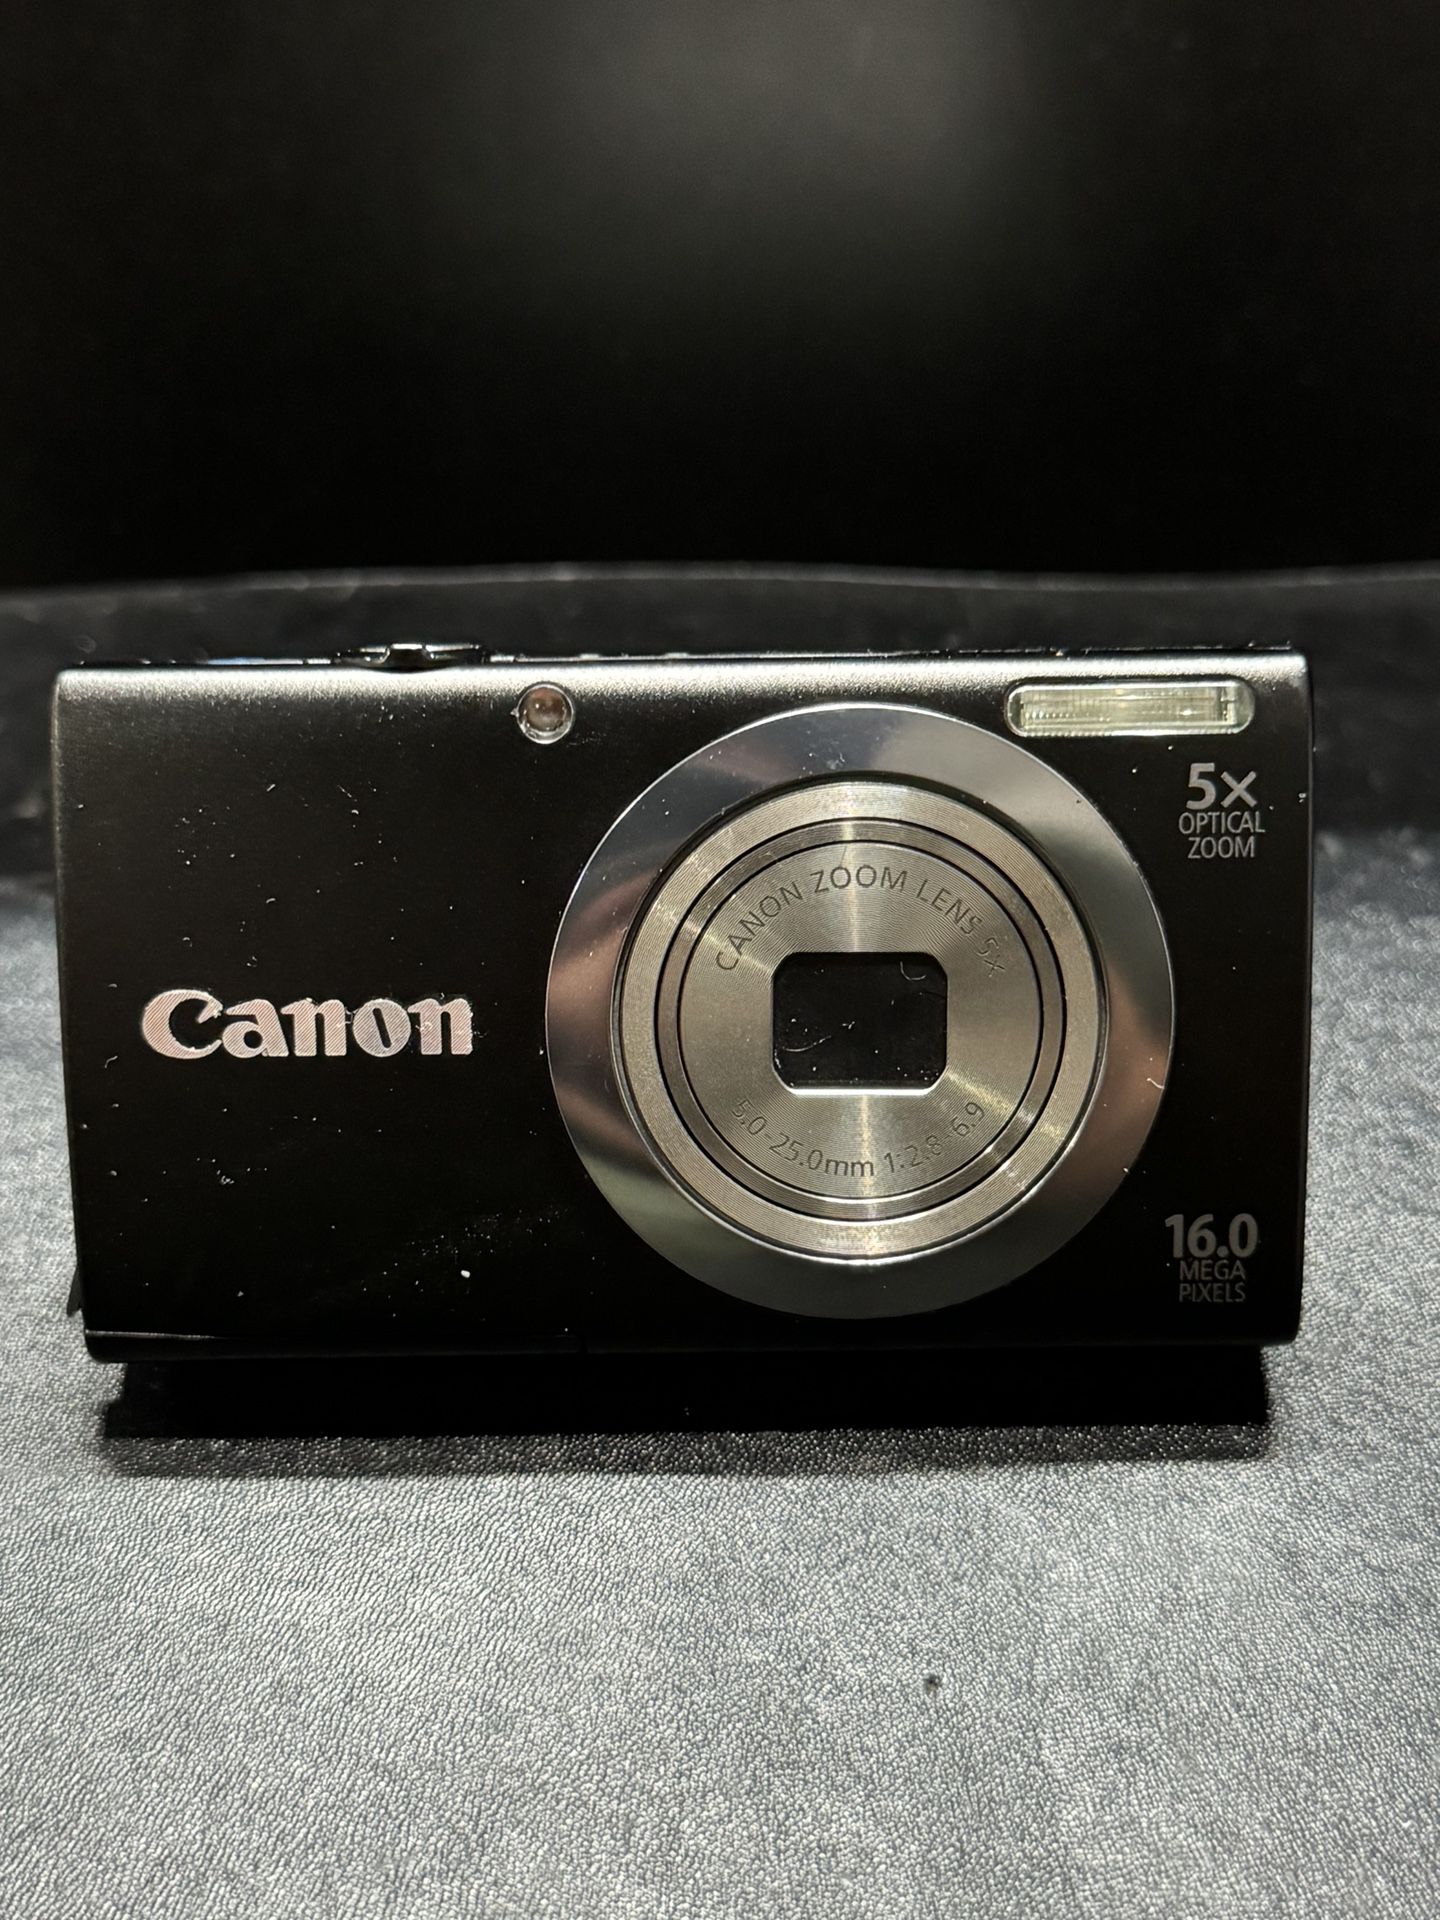 Canon PowerShot A2300 IS 16.0 MP Digital Camera